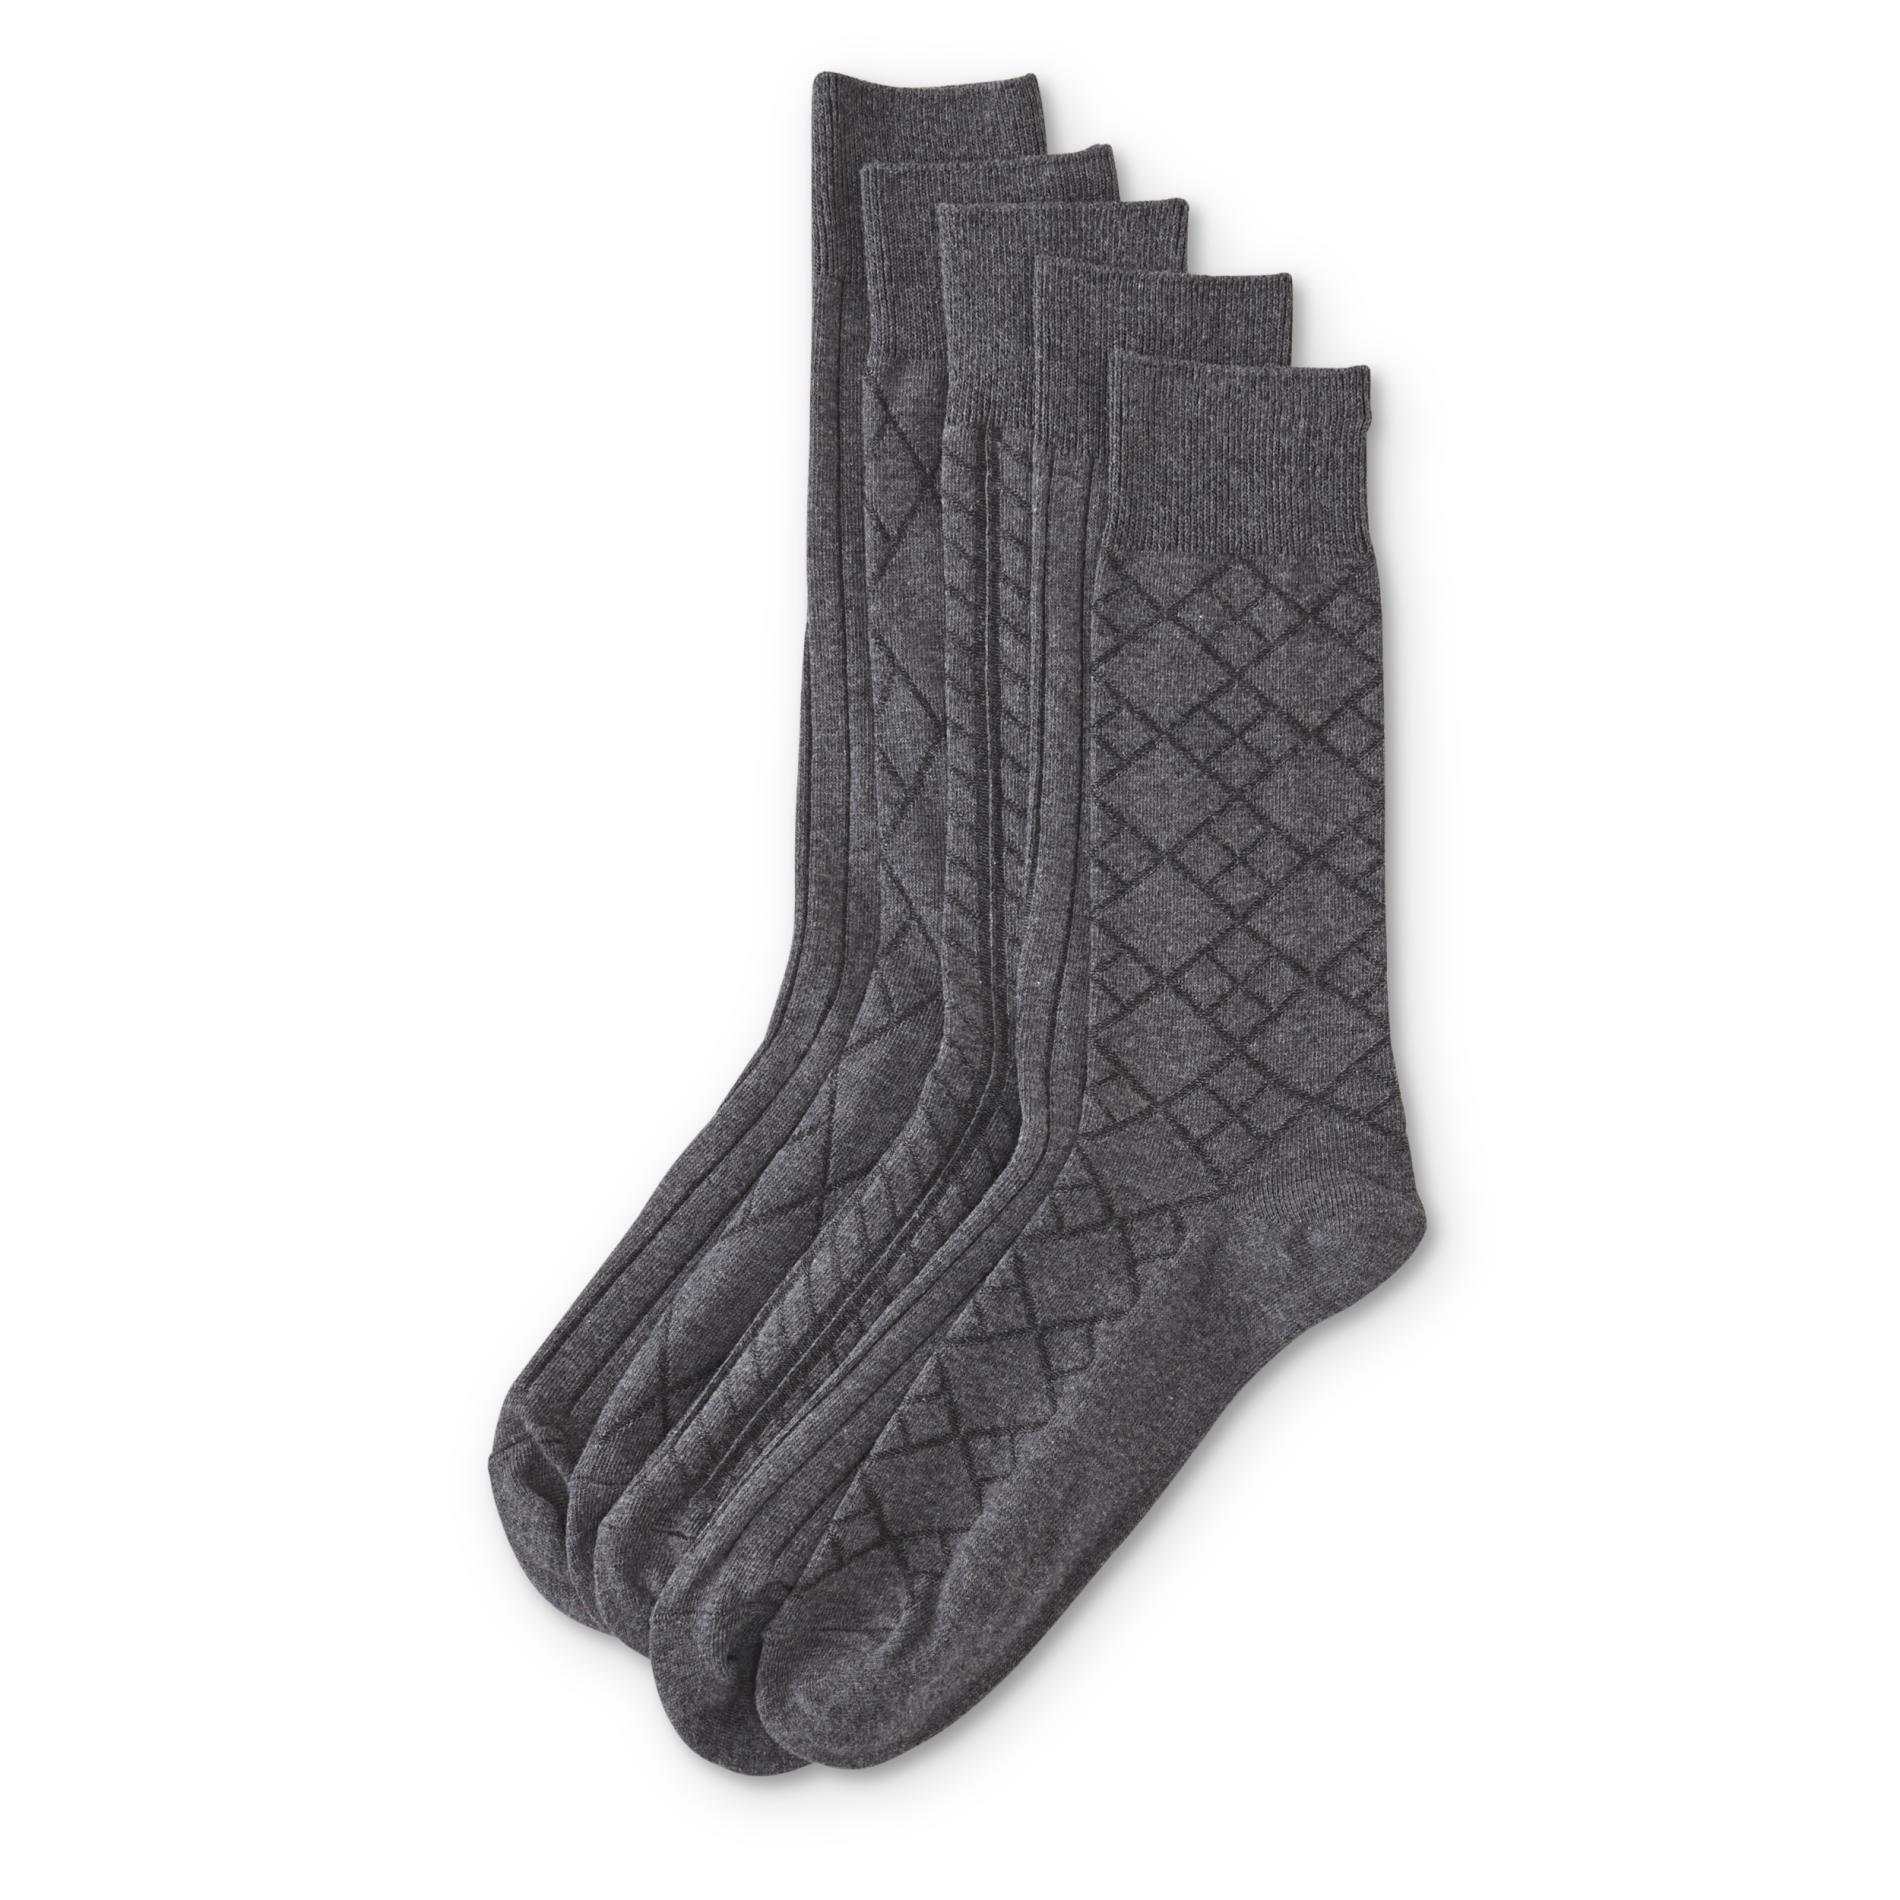 Basic Editions Men's 5-Pairs Dress Socks - Textured